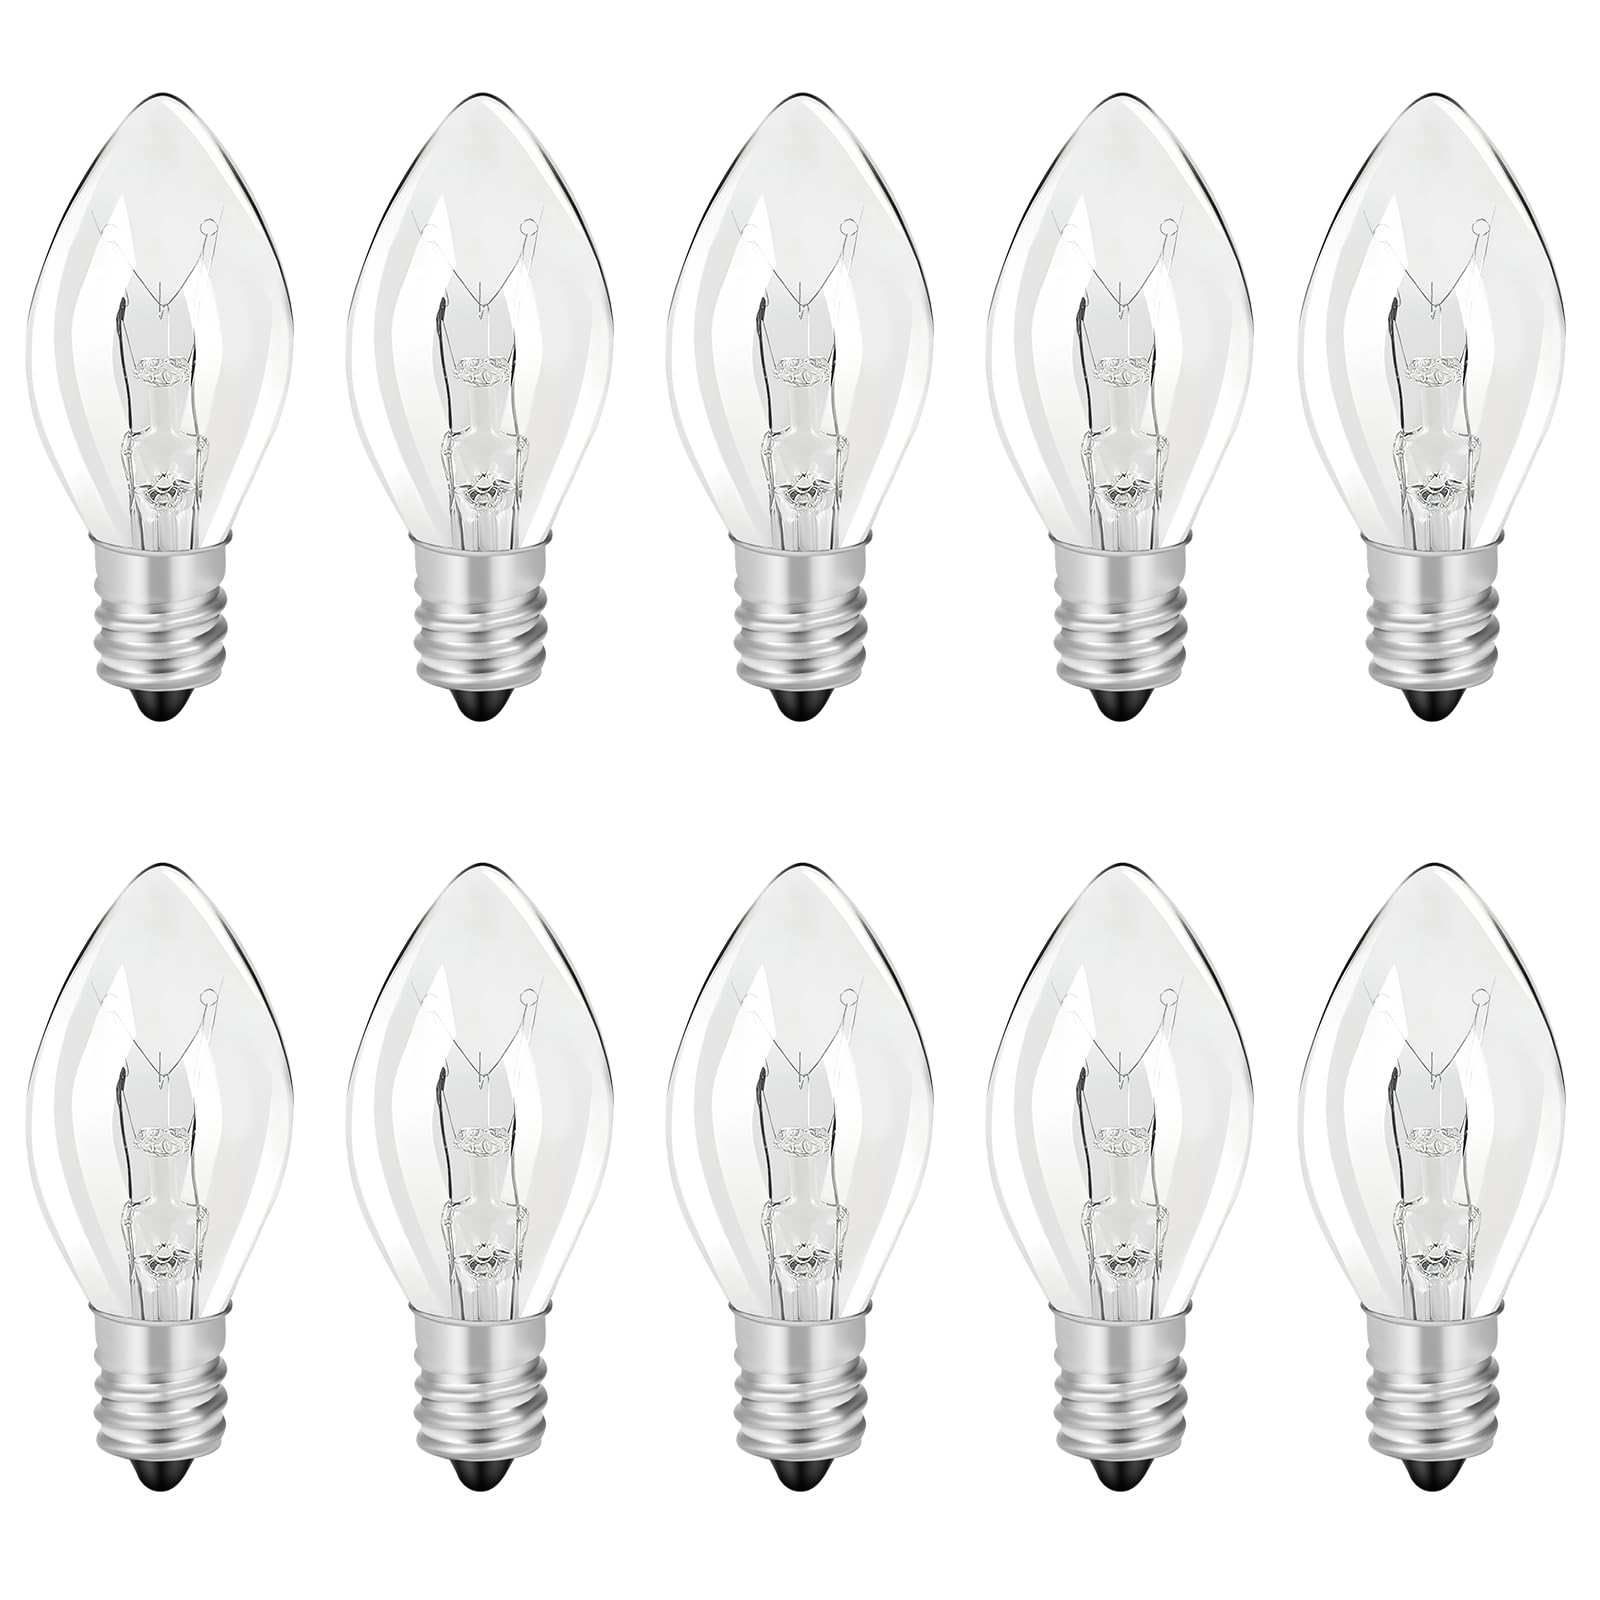 SENITEK EARPADS Flea Trap Light Bulb Replacement, 10 Pack 7W Flea Trap Bulbs, Replacement Bulbs for Flea Traps Inside Your Home, E12 7 Watt 120 Volt Bulb with a Screw-in Base for Flea Trap Light Lamp